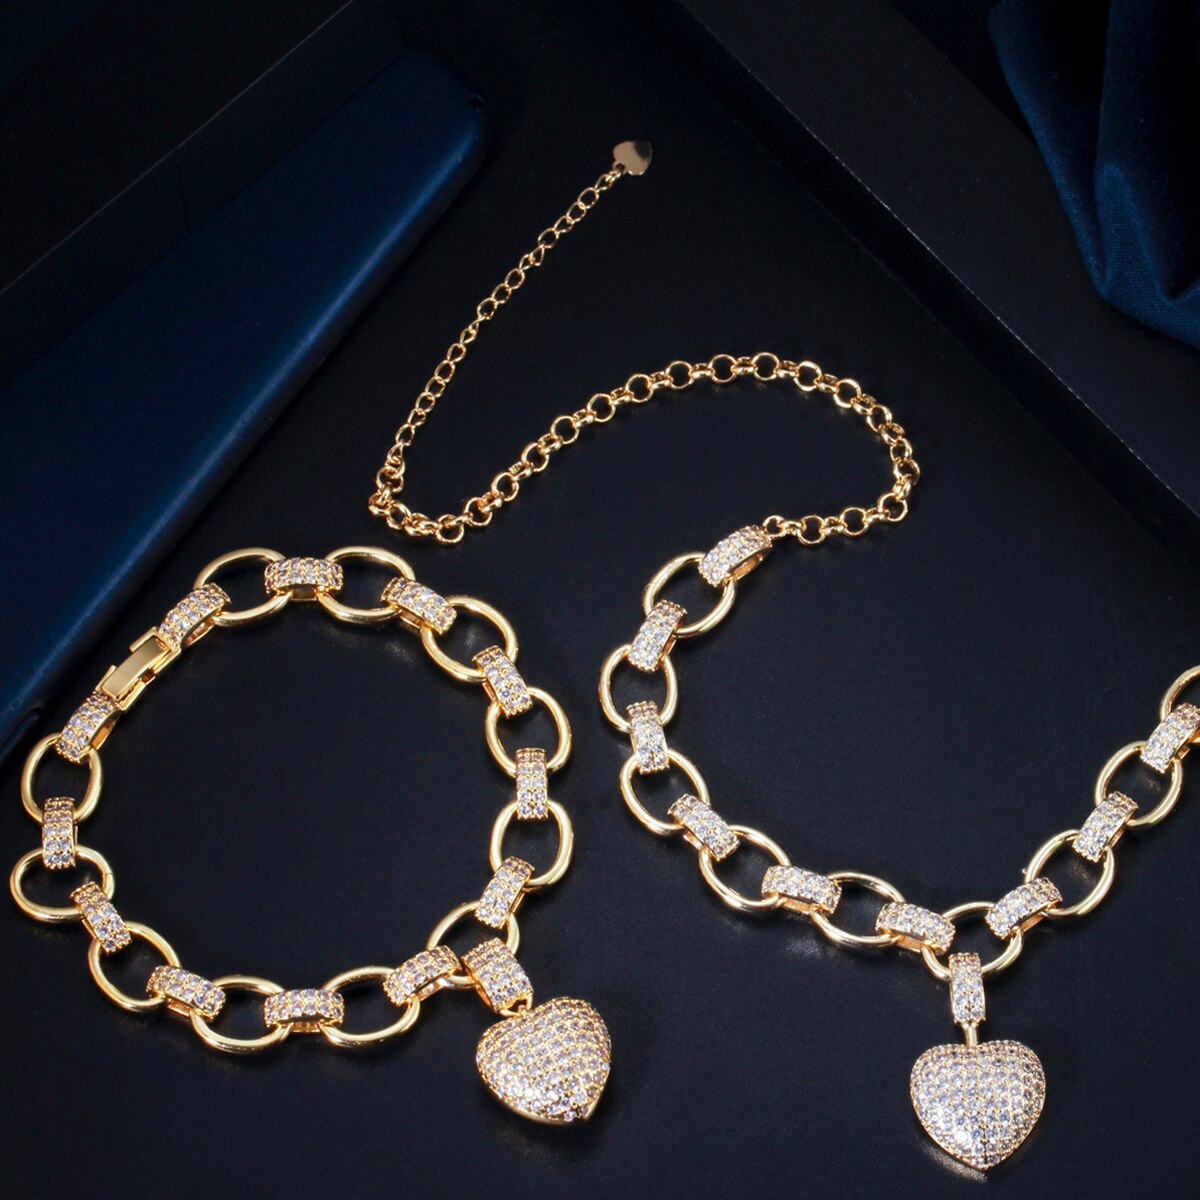 ThreeGraces-Luxury-Cubic-Zirconia-Stone-Yellow-Gold-Color-Love-Heart-Pendant-Necklace-Bracelet-Set-f-1005003297996366-11